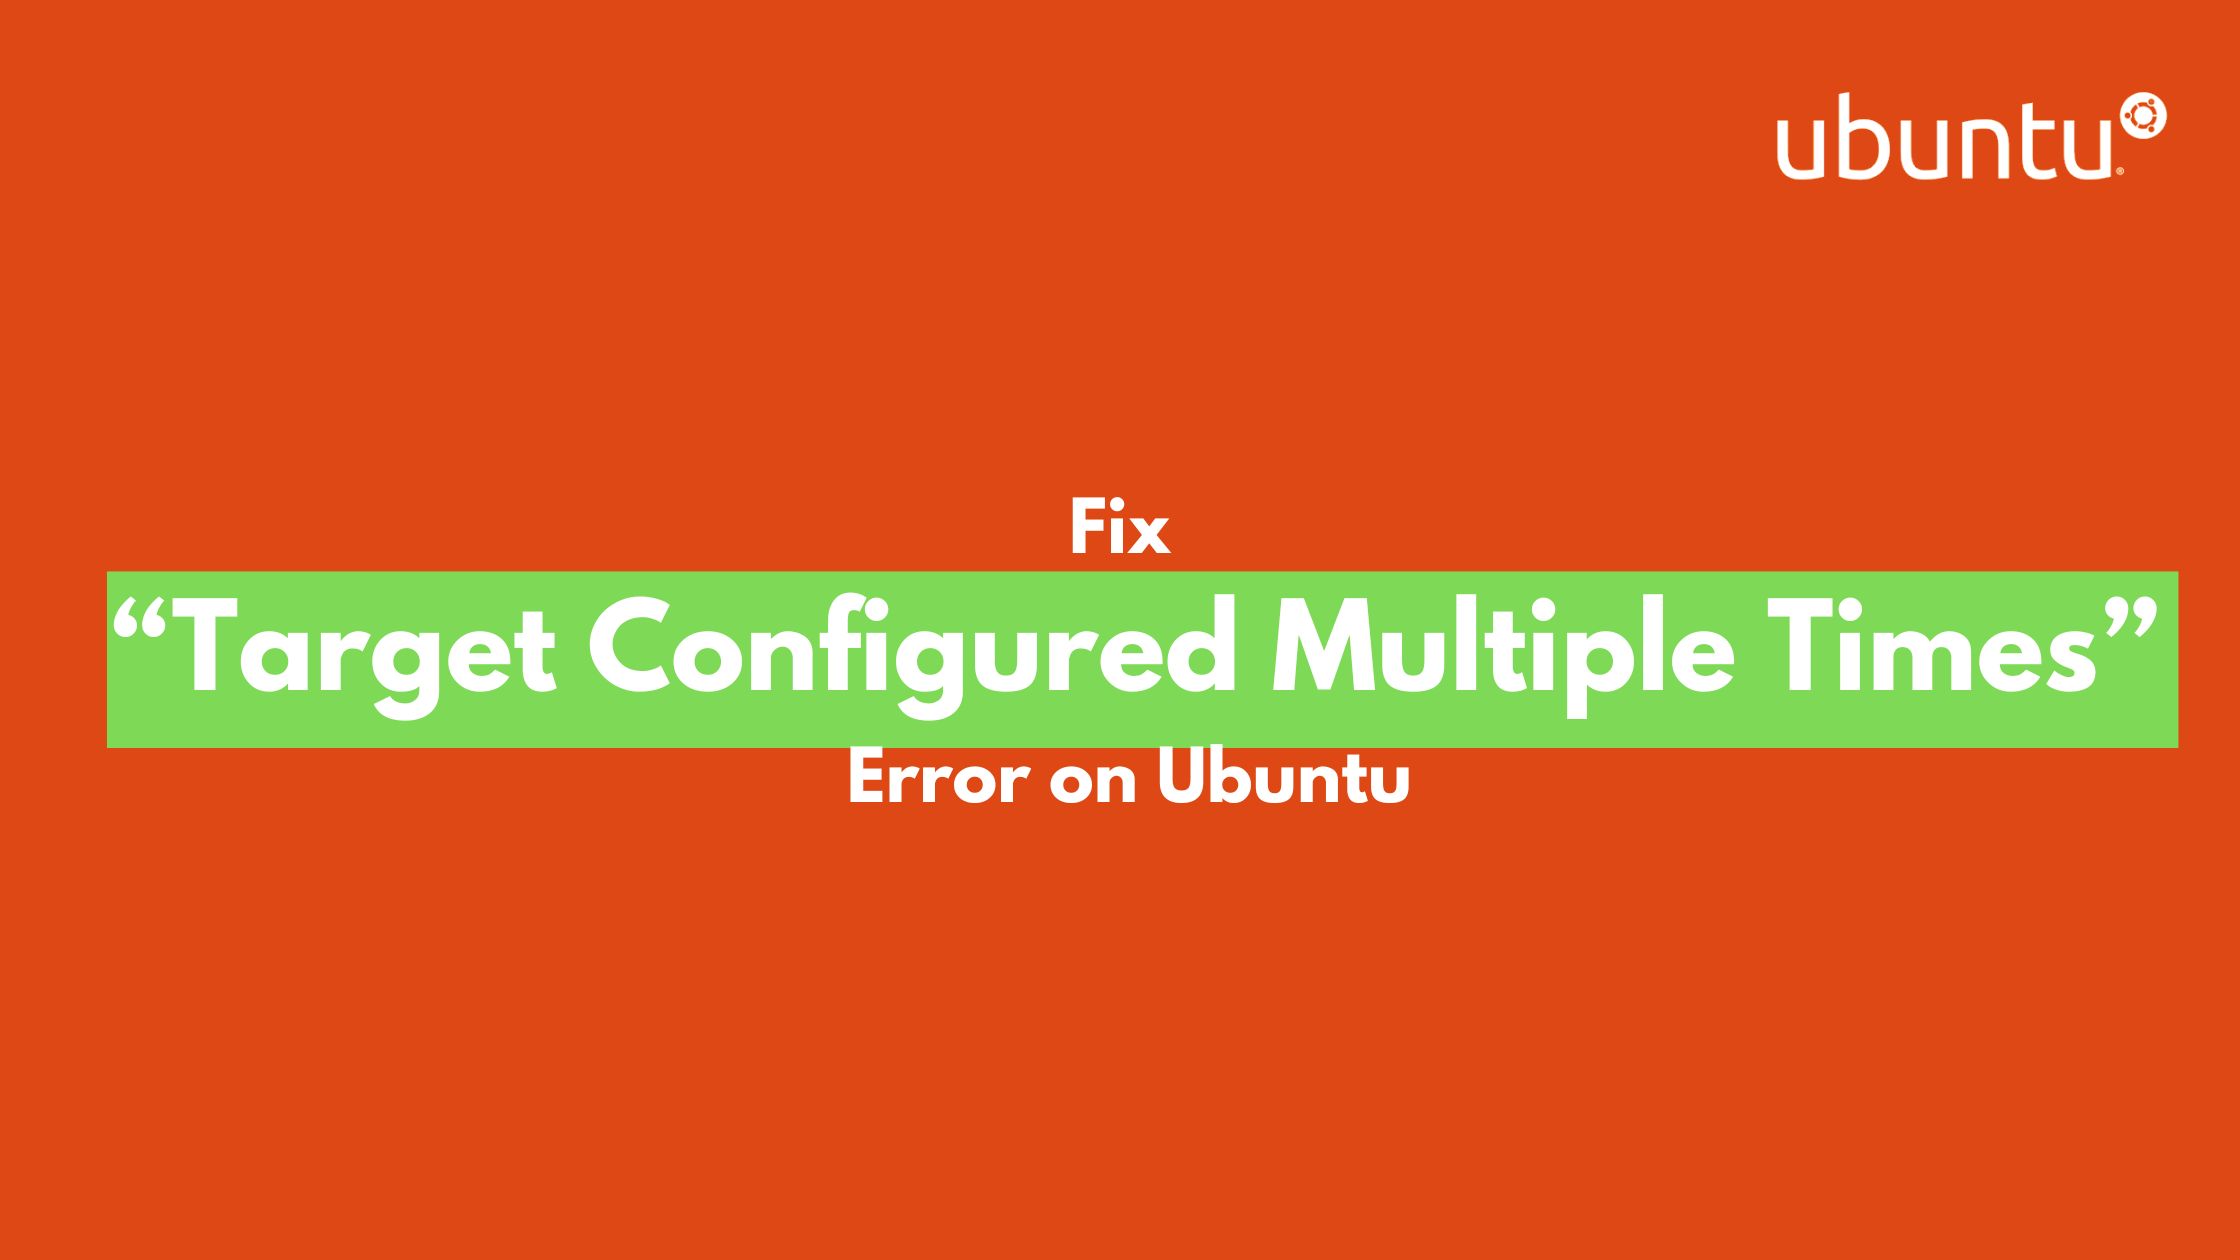 Best Way To Fix “Target Configured Multiple Times” Error on Ubuntu